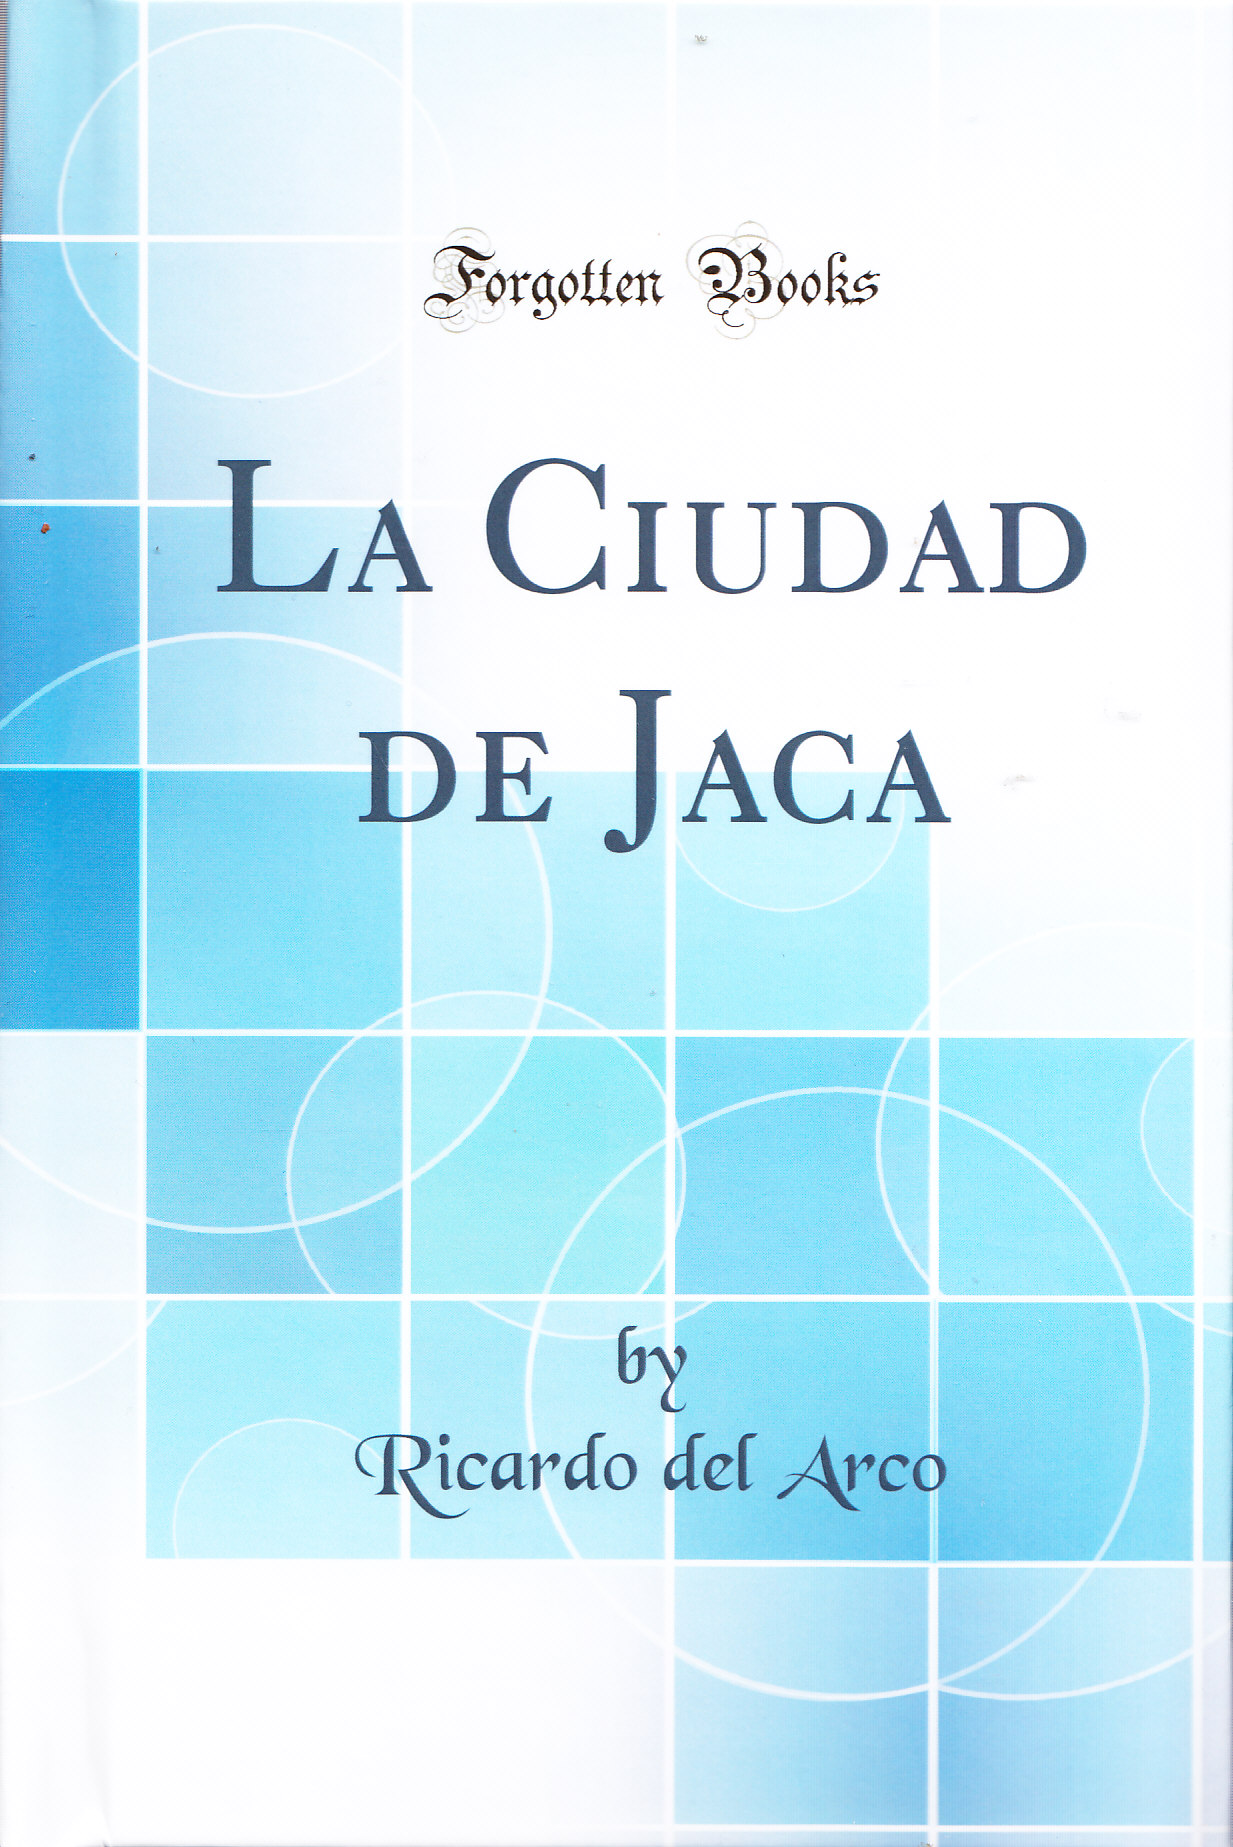 La CIUDaD DE JaCa FORGEOTTEN BOOKS